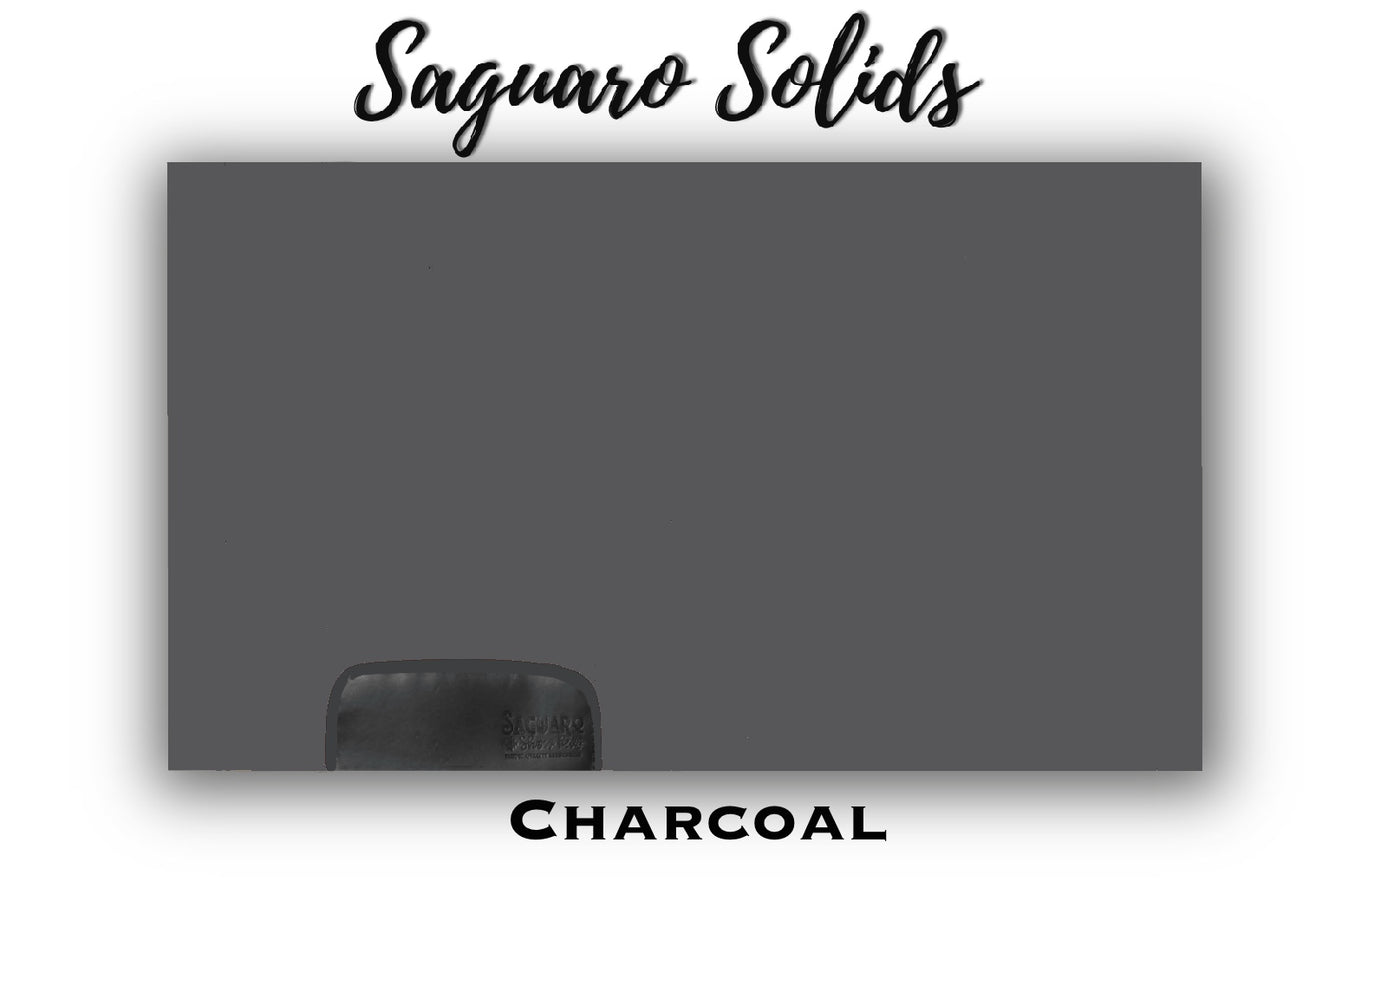 Saguaro Solid "Charcoal" Show Pad (SEMI-CUSTOM)